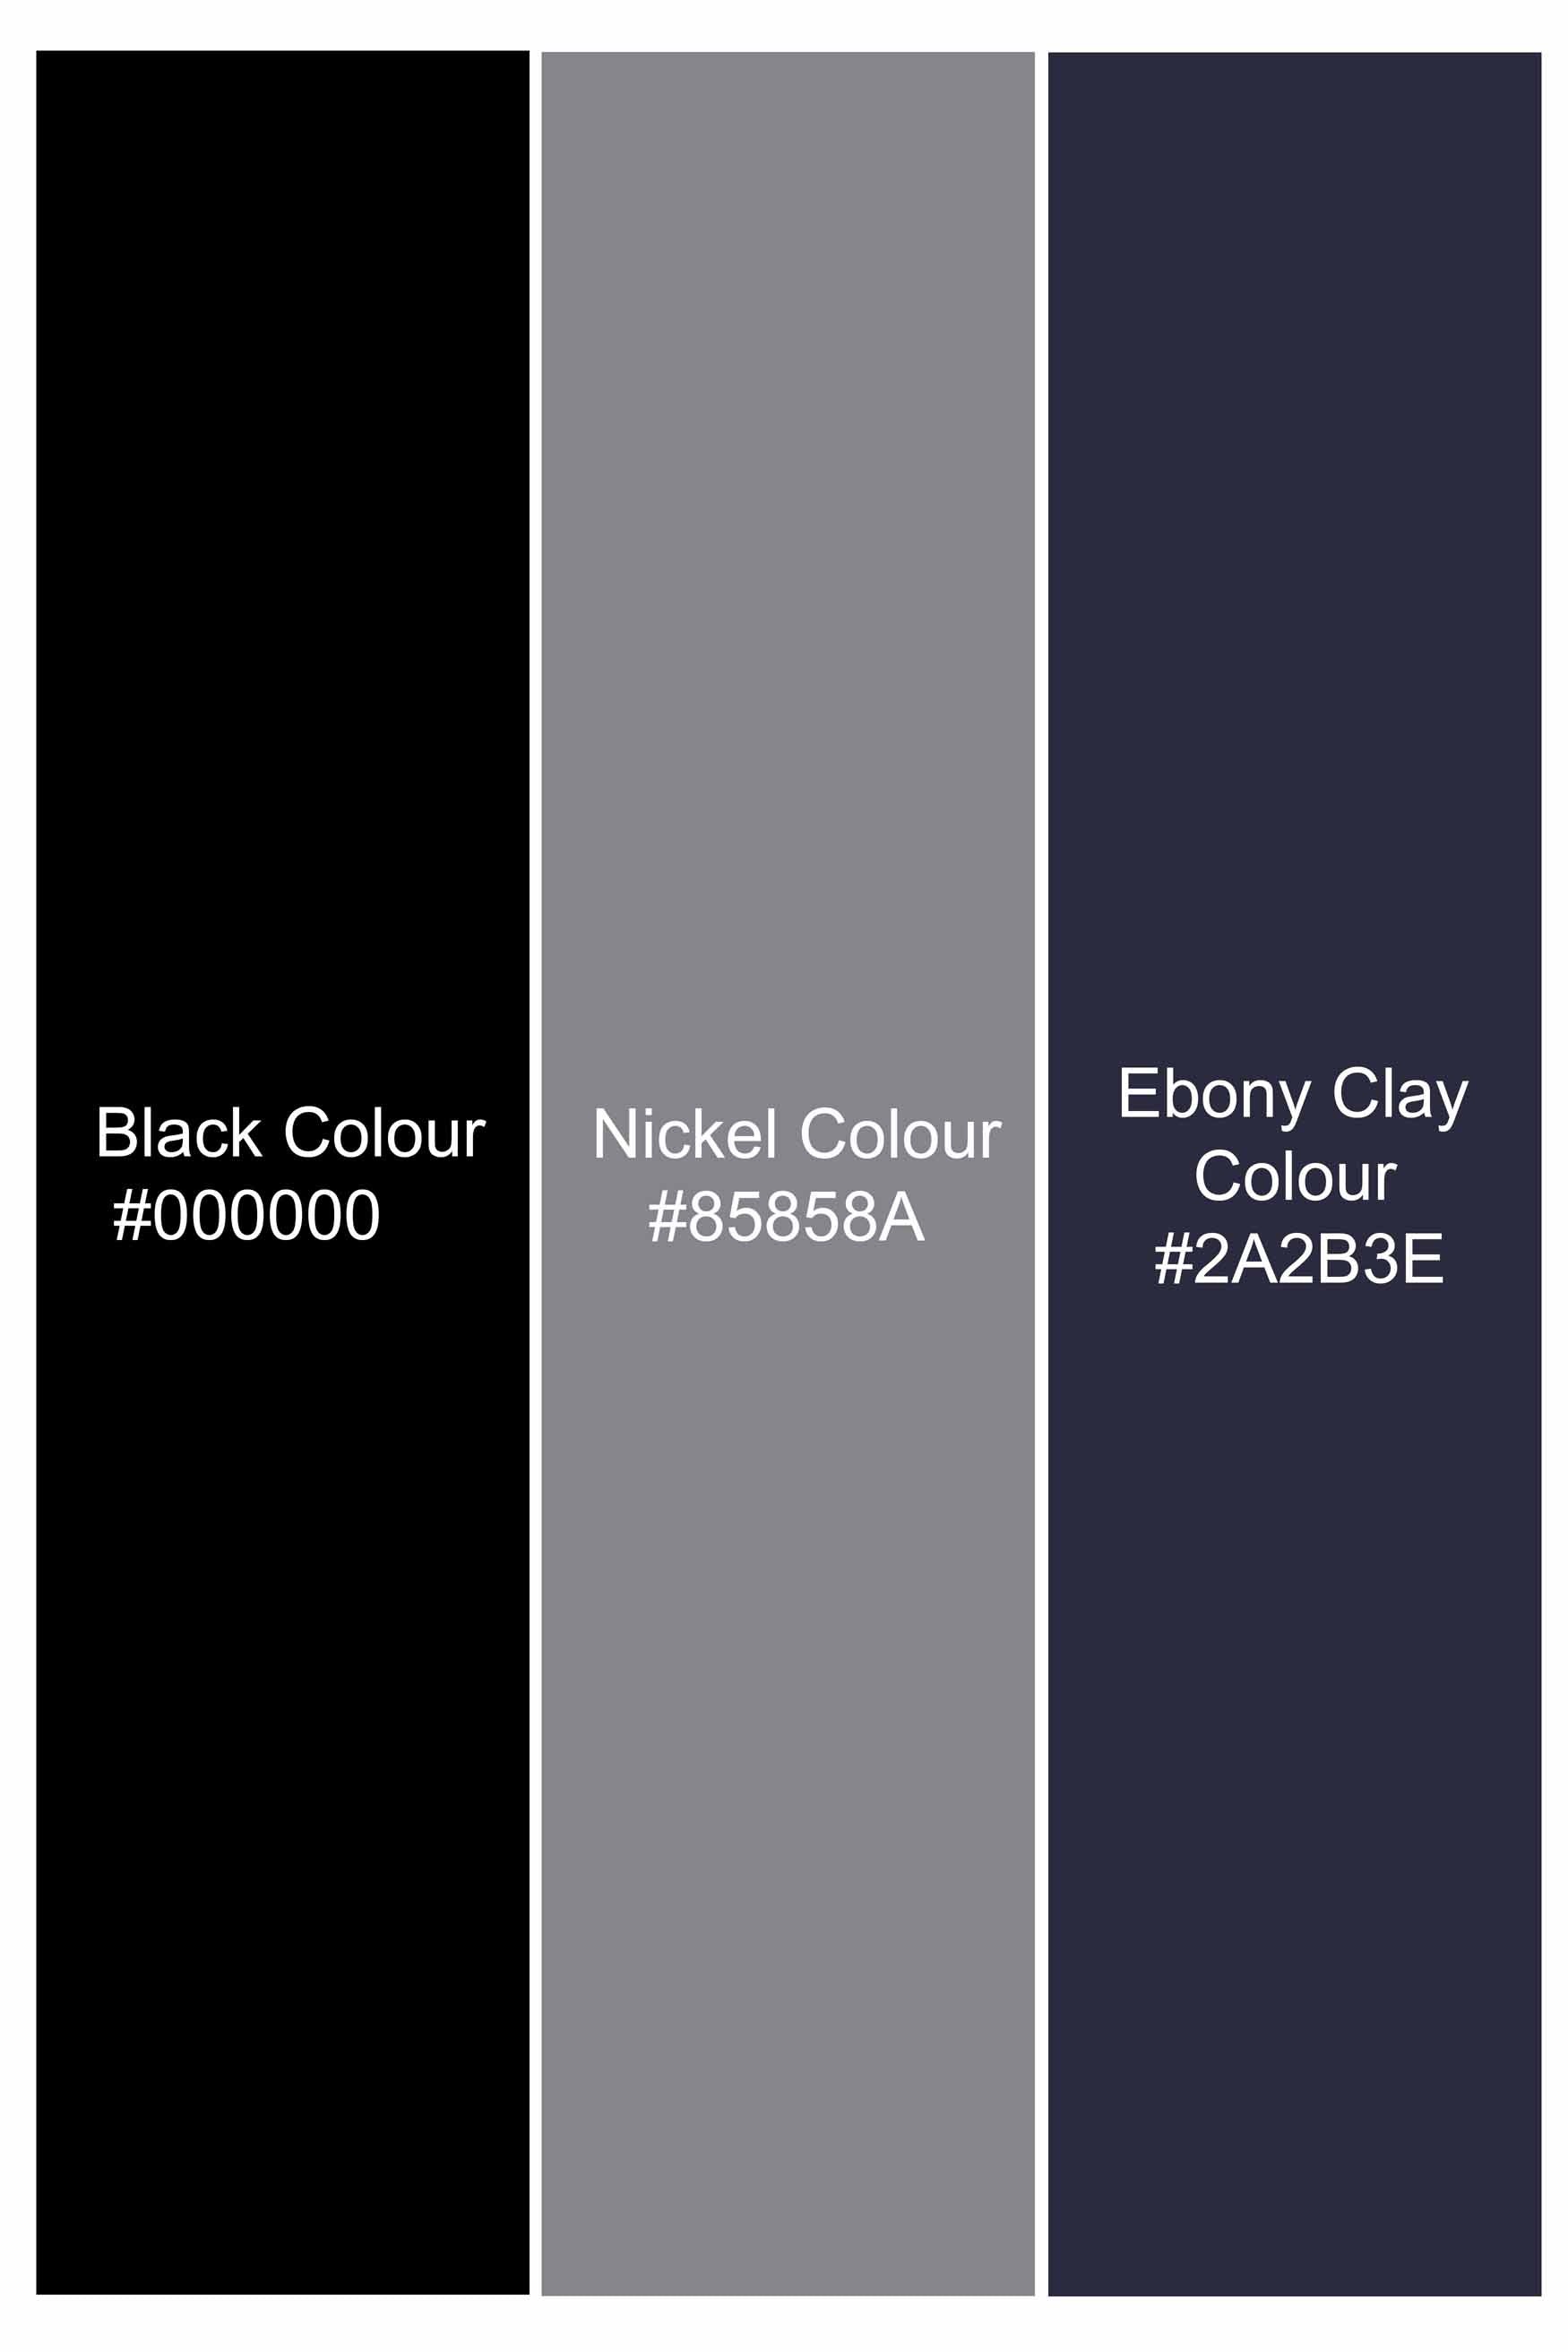 Jade Black with Nickel Gray and Ebony Blue Leaves Printed Subtle Sheen Super Soft Premium Cotton Designer Shirt 11585-P502-38, 11585-P502-H-38, 11585-P502-39, 11585-P502-H-39, 11585-P502-40, 11585-P502-H-40, 11585-P502-42, 11585-P502-H-42, 11585-P502-44, 11585-P502-H-44, 11585-P502-46, 11585-P502-H-46, 11585-P502-48, 11585-P502-H-48, 11585-P502-50, 11585-P502-H-50, 11585-P502-52, 11585-P502-H-52